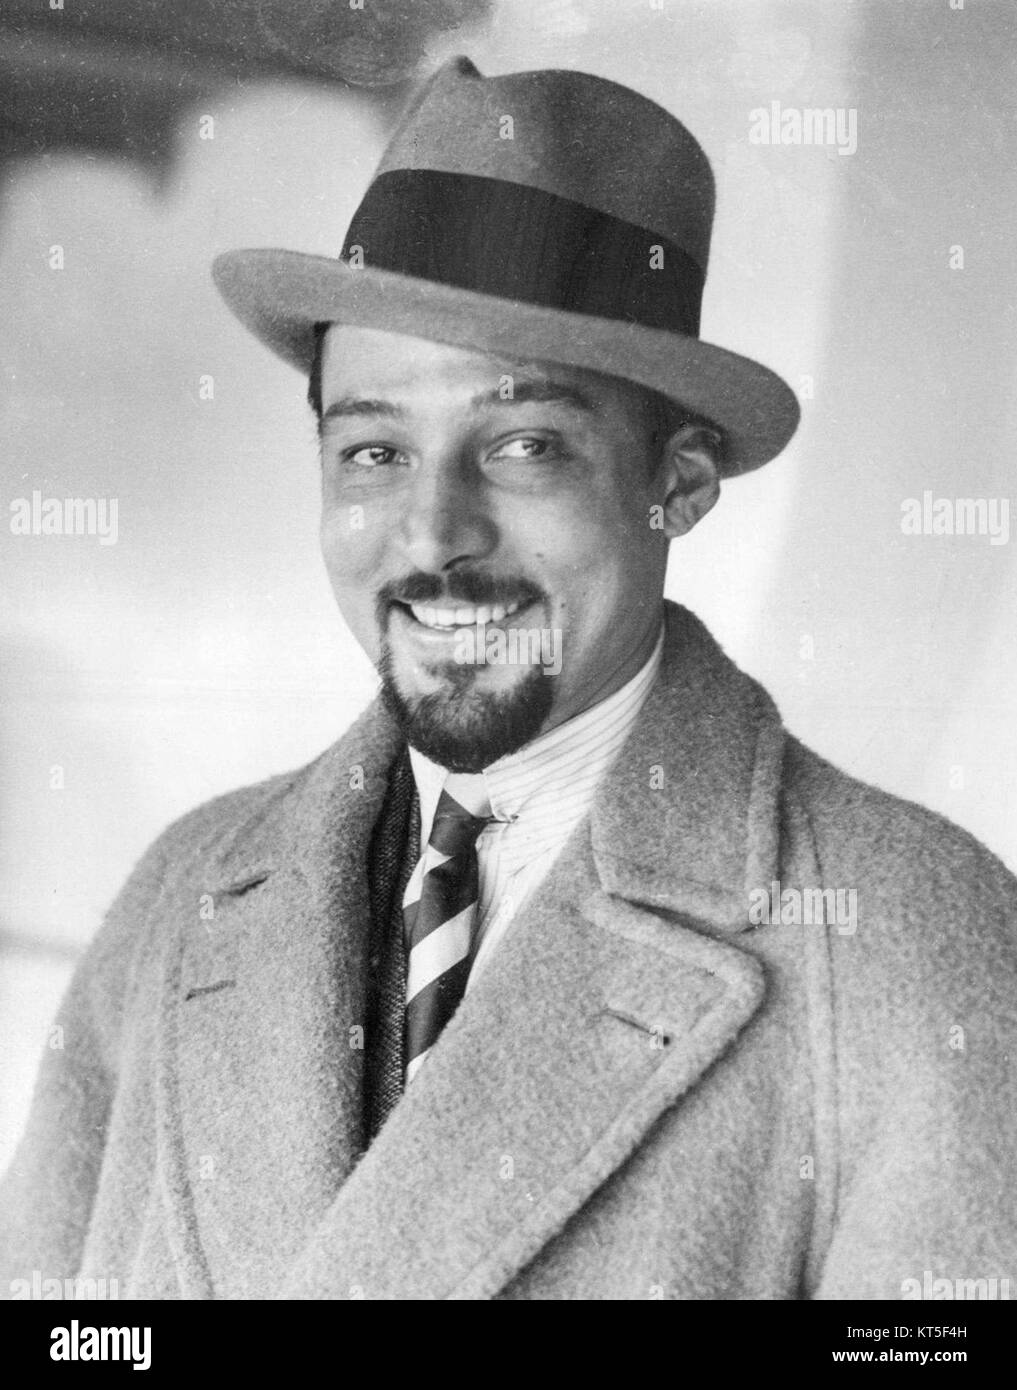 Rudolph Valentino with beard 1924 Stock Photo - Alamy